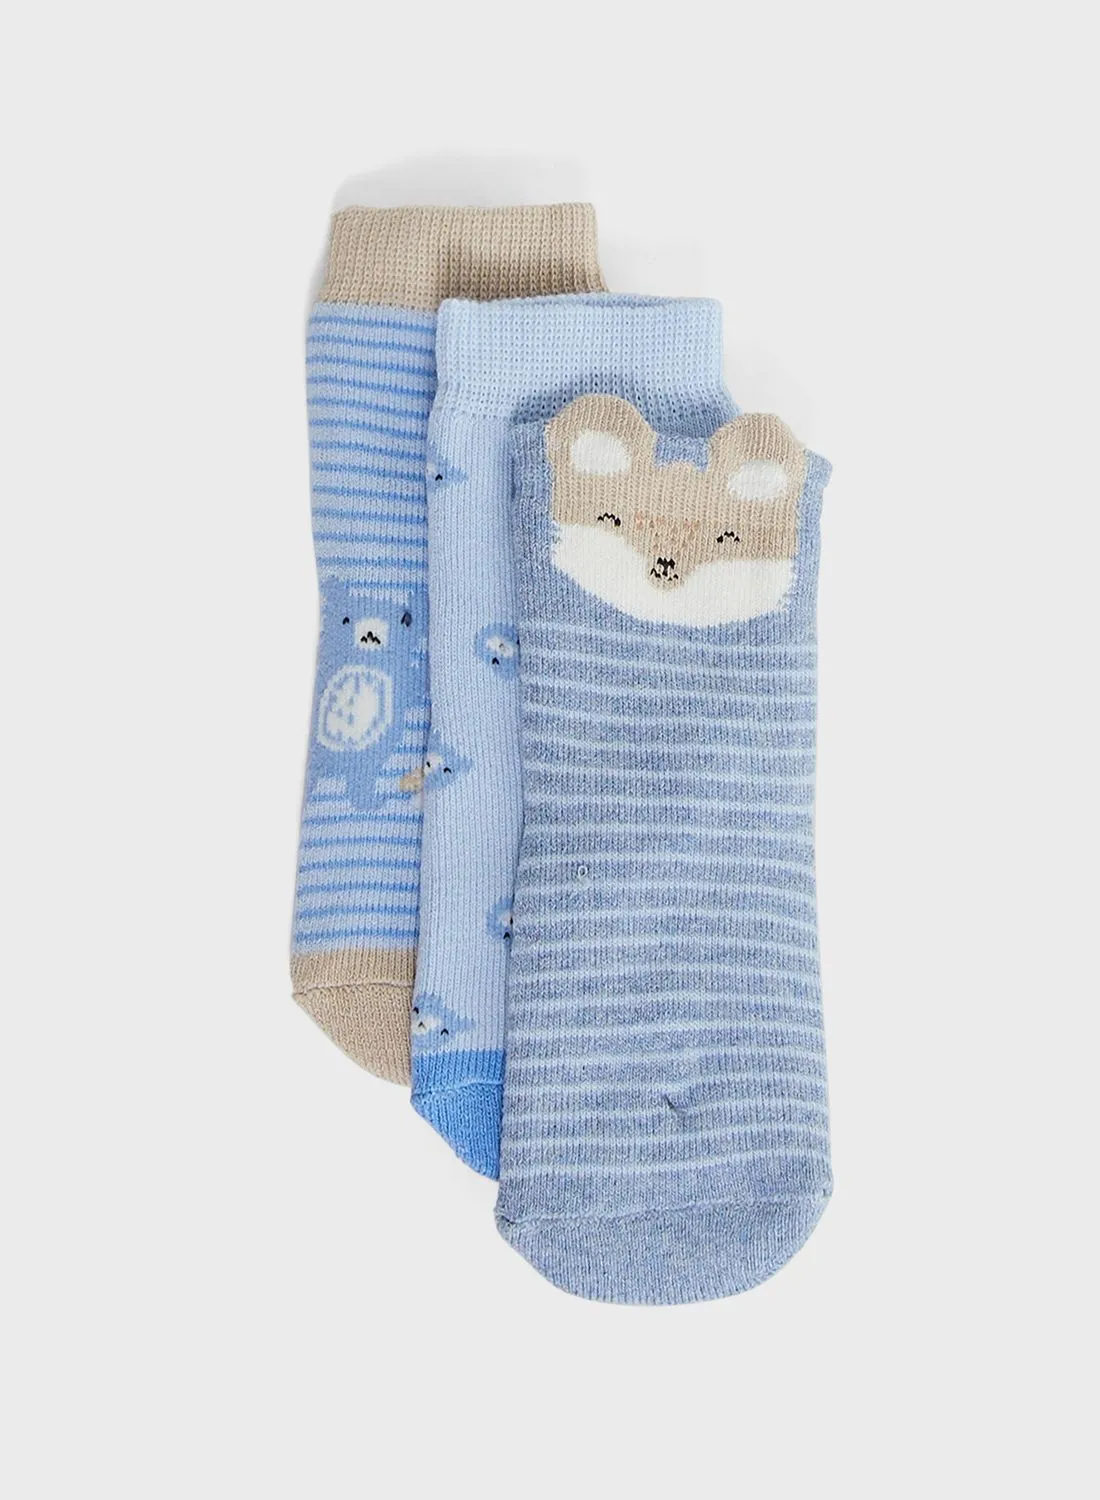 mothercare Infant 3 Pack Assorted Socks